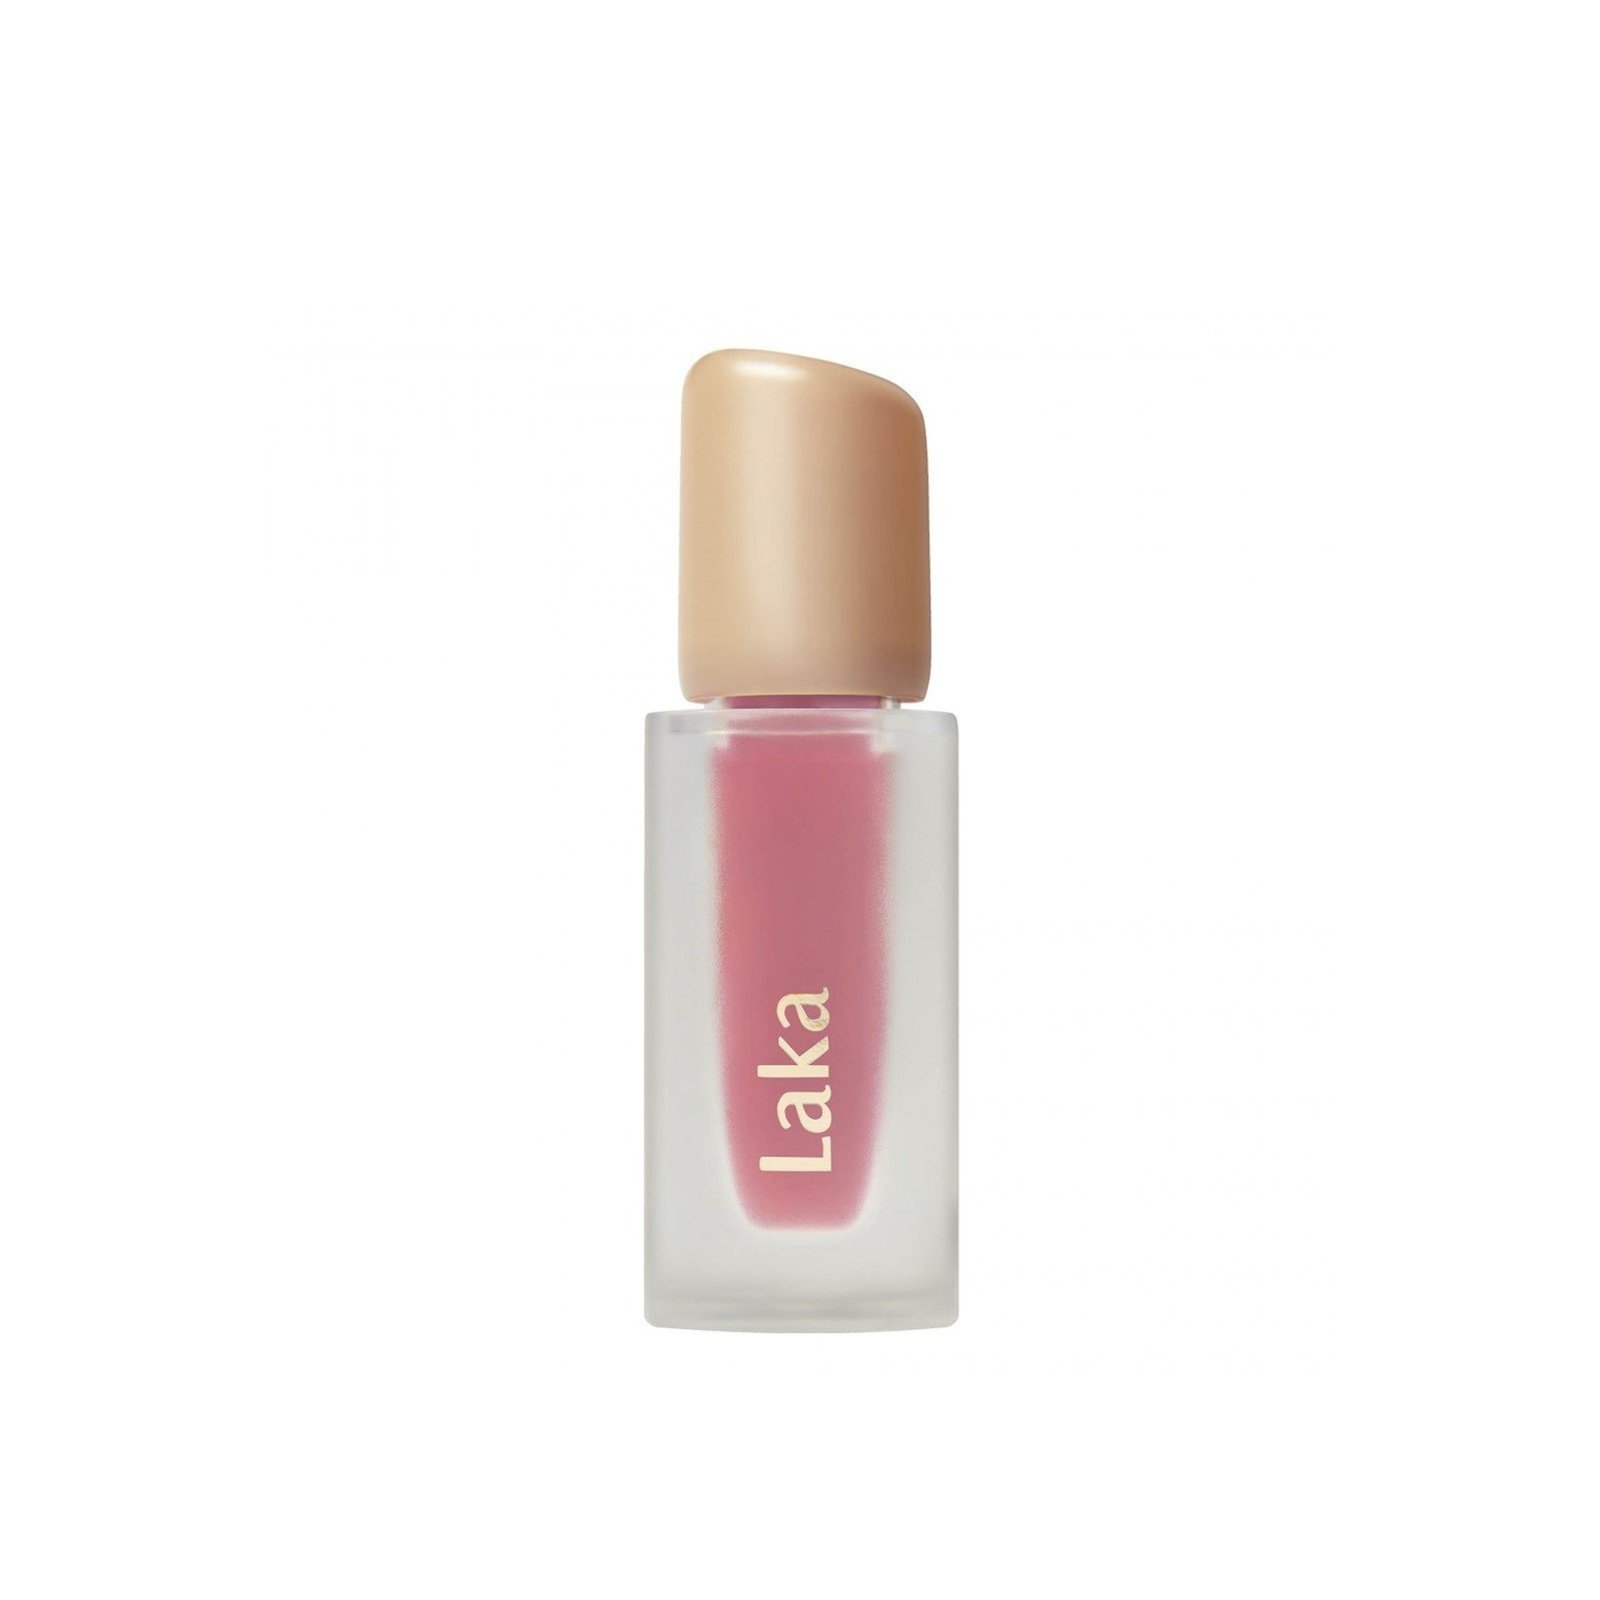 Laka Fruity Glam Lip Tint 119 Dreaming 4.5g (0.15 oz)